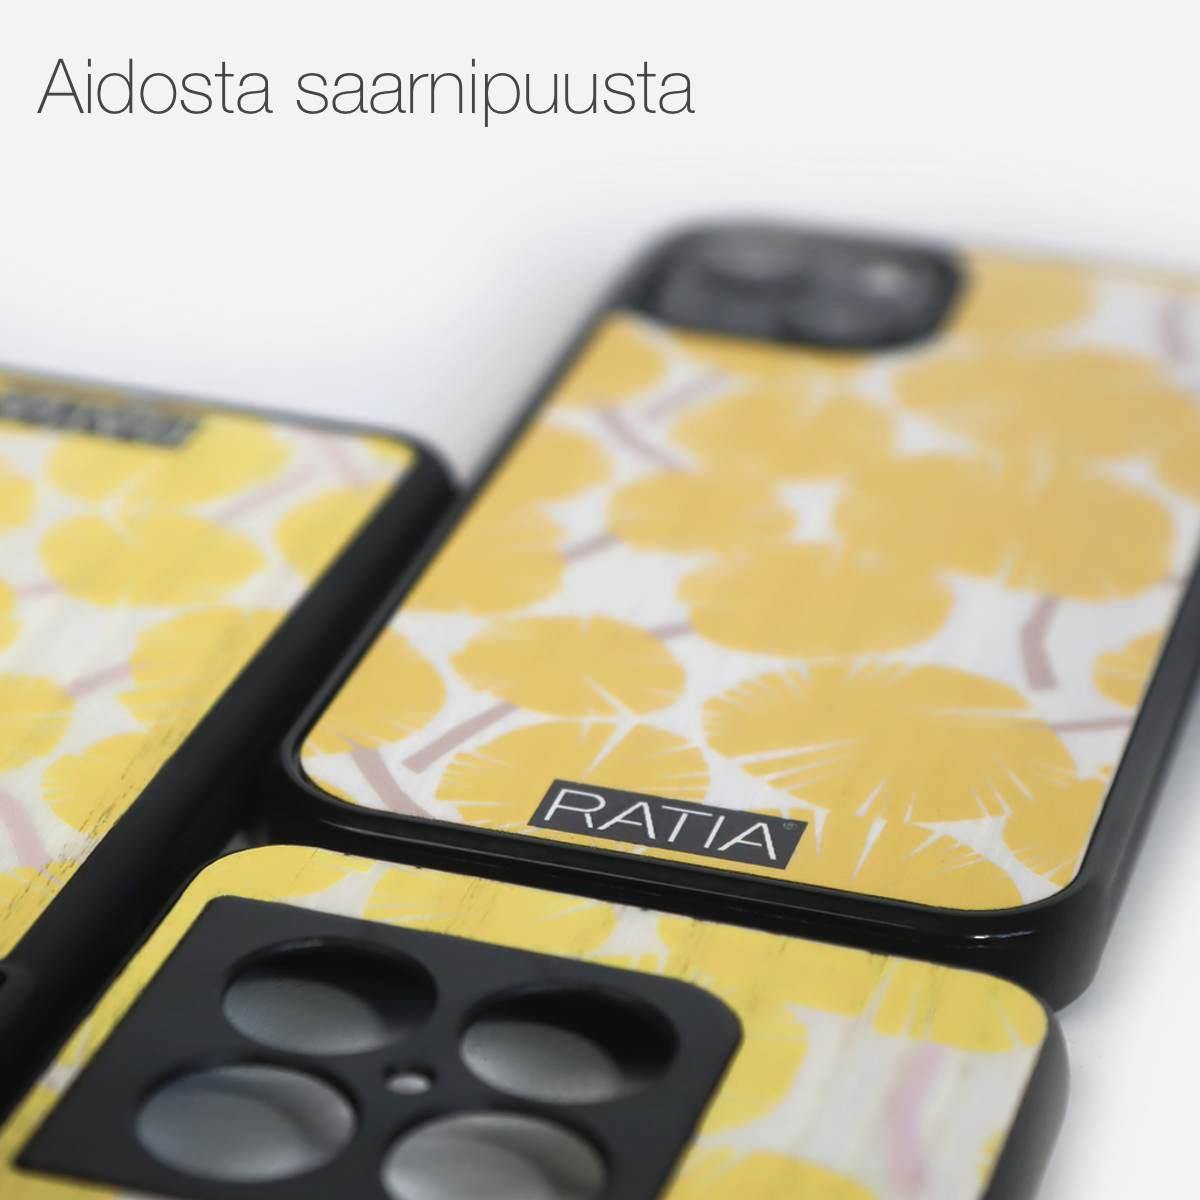 LASTU x RATIA - Voikukka - Lastu - Nordic Wooden Phone Cases - Ratia Cases - Design Collection, Ratia